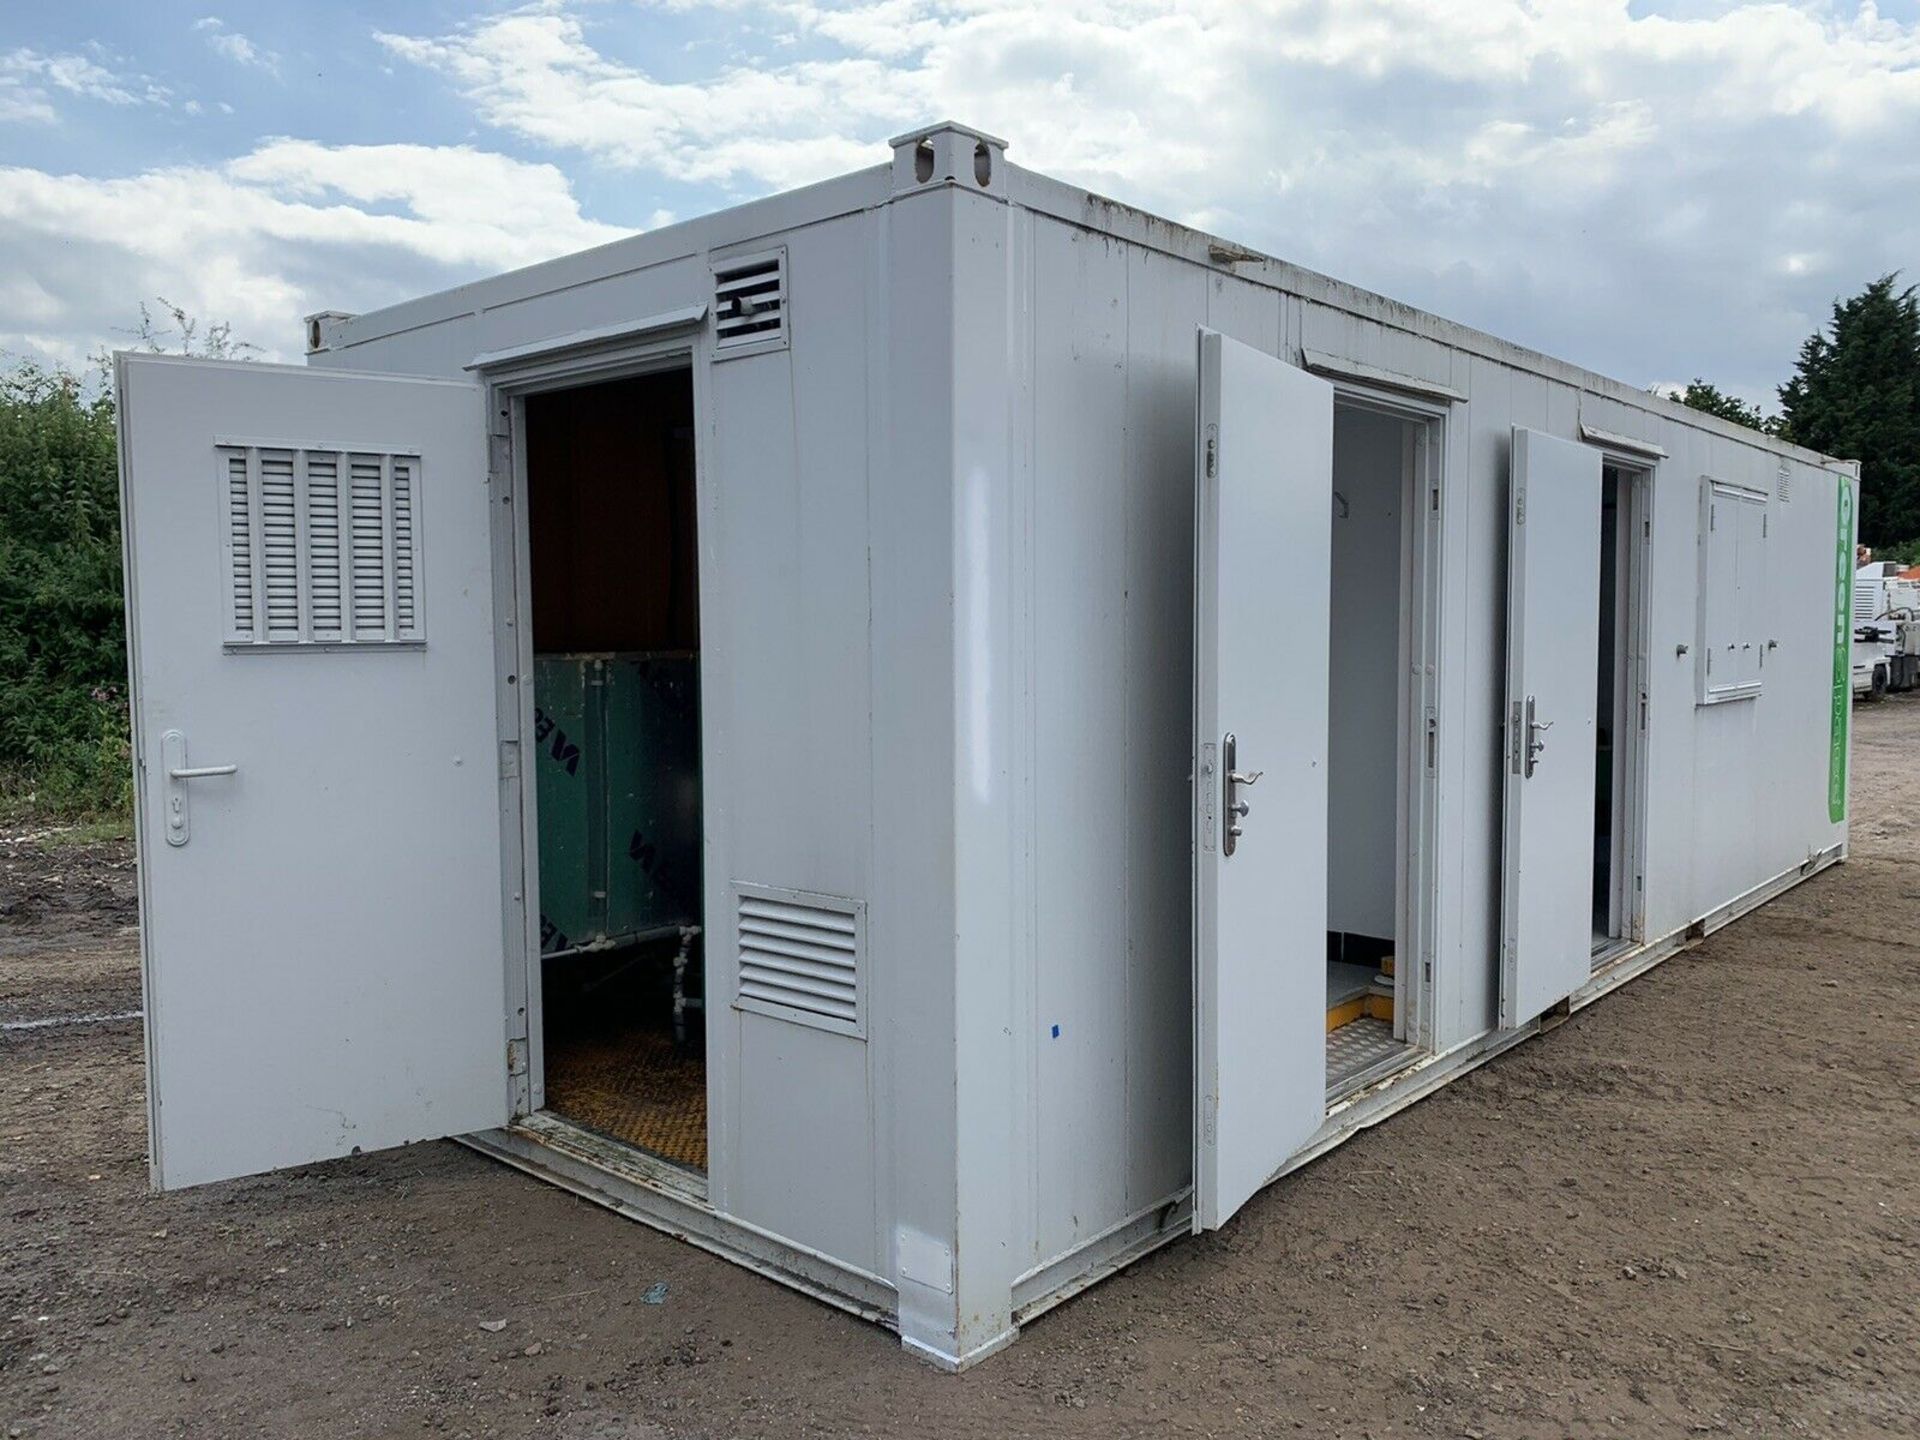 ECO Welfare Unit Site Cabin Canteen Generator Toilet Portable Anti Vandal Steel - Image 2 of 11